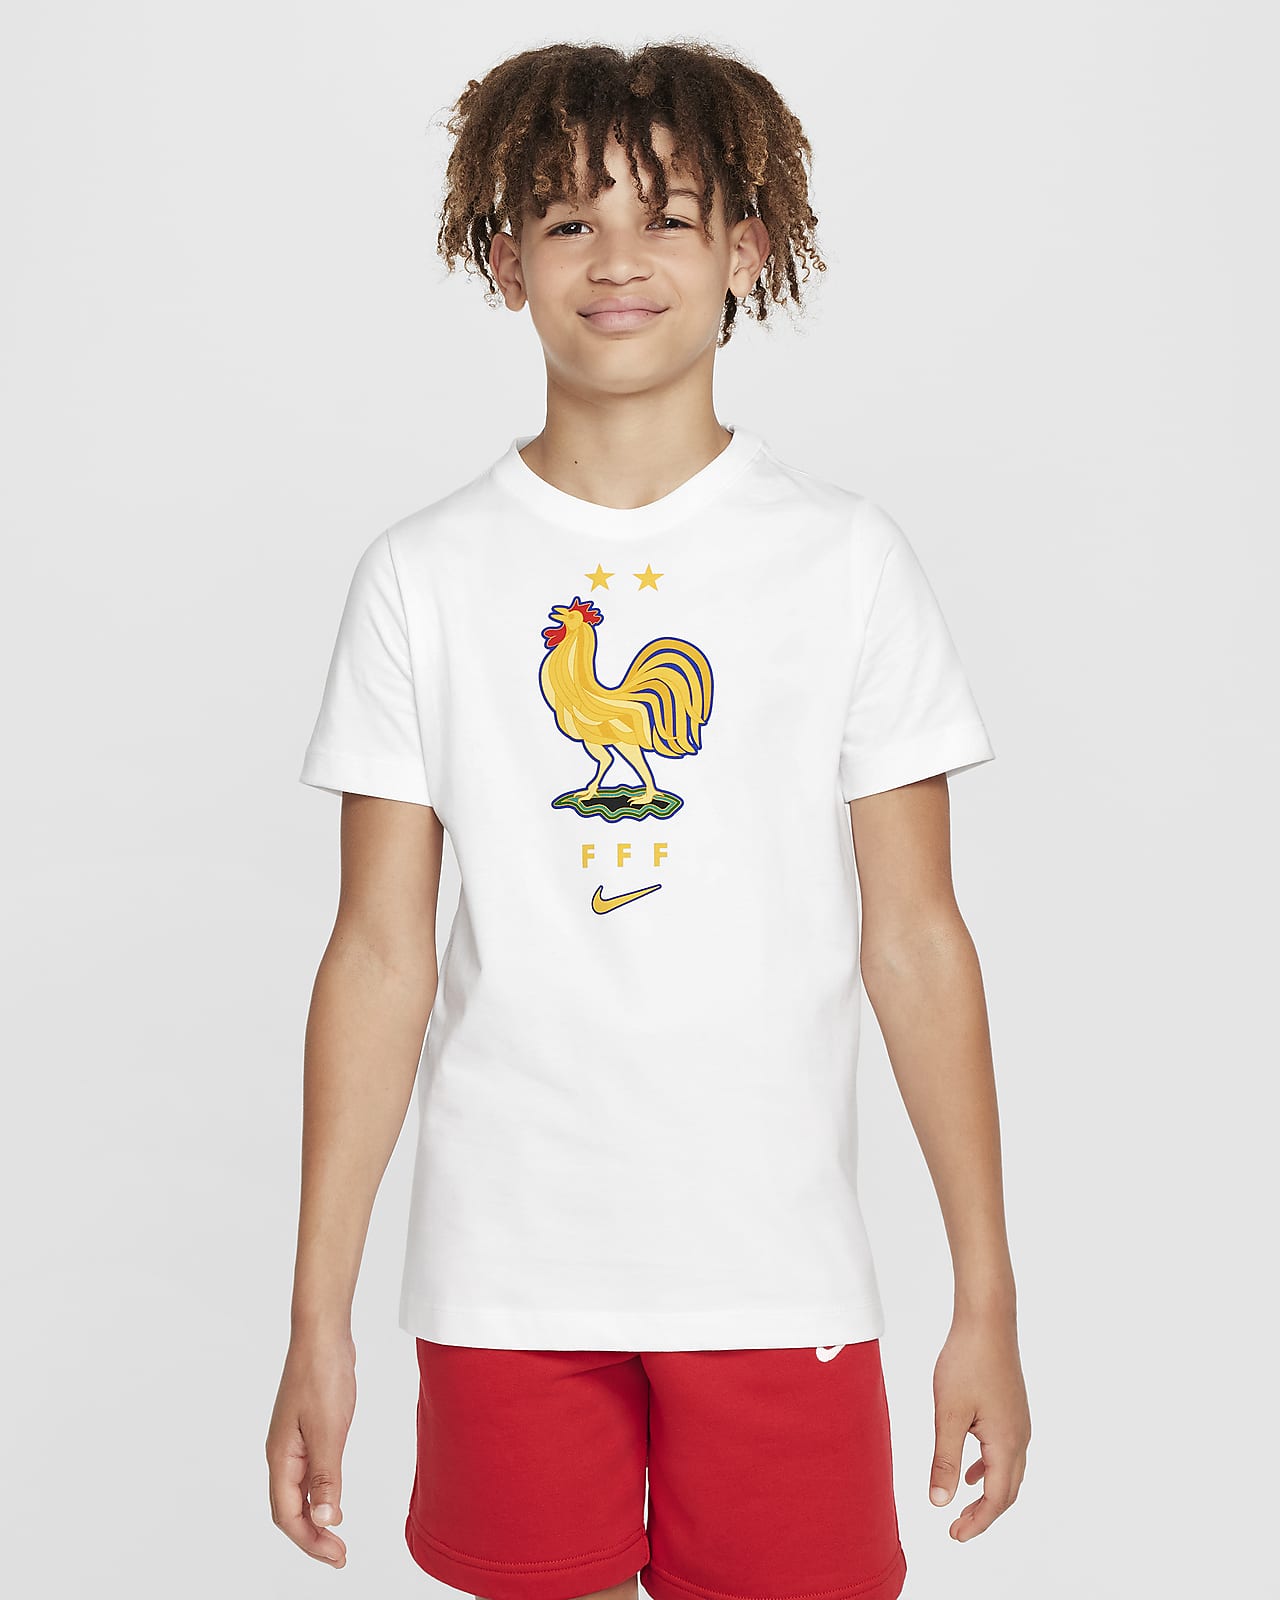 FFF Camiseta Nike Football - Niño/a